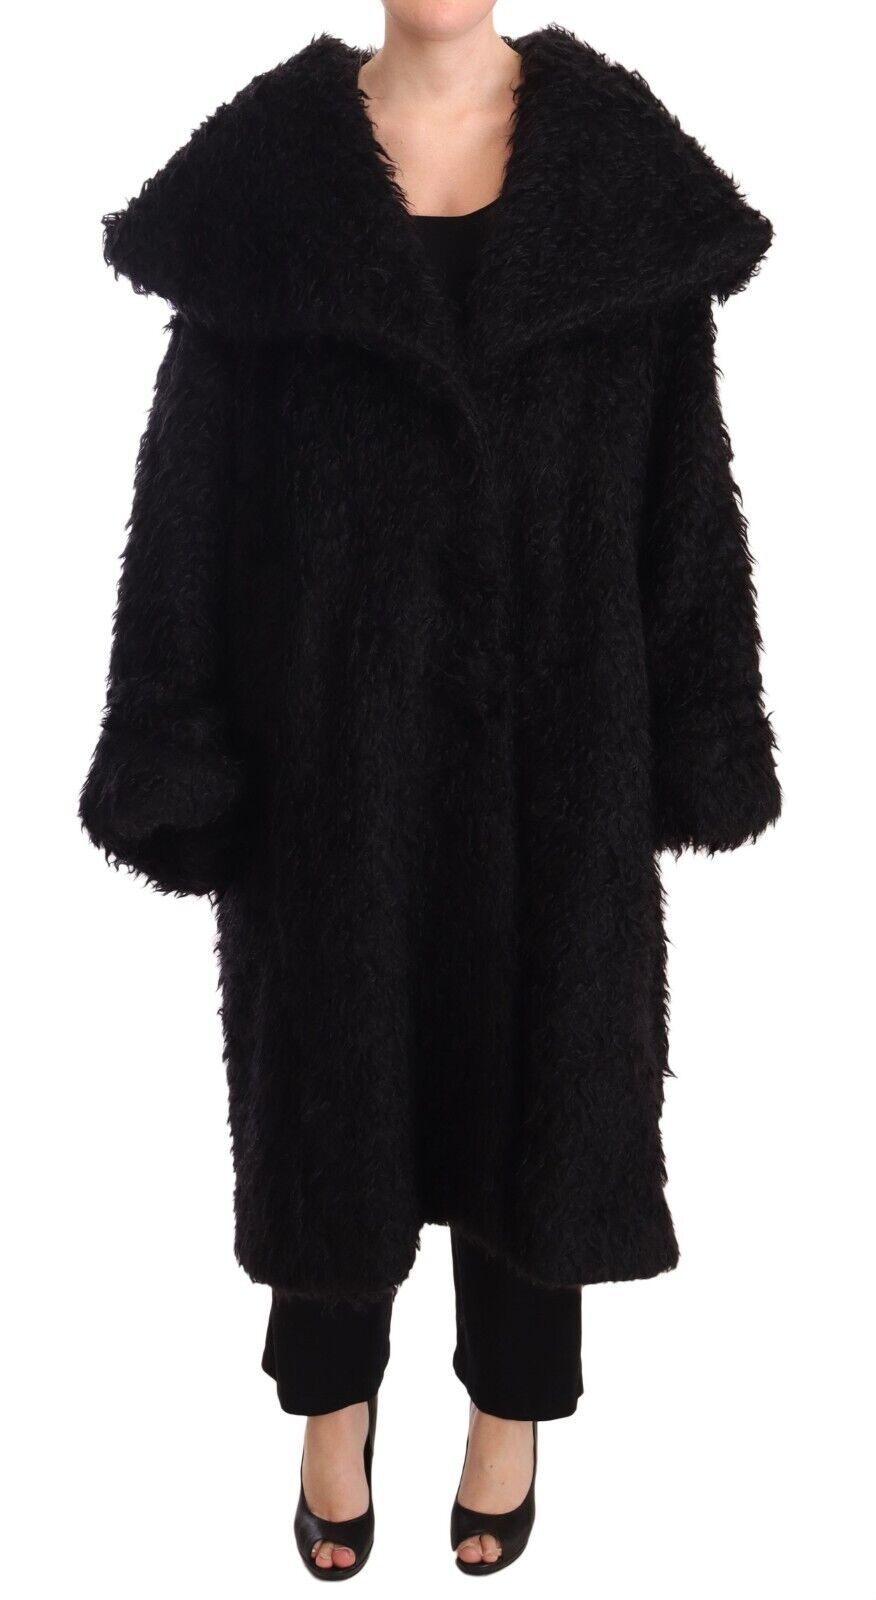 Dolce & Gabbana Black Mohair Fur Cape Trench Coat Jacket